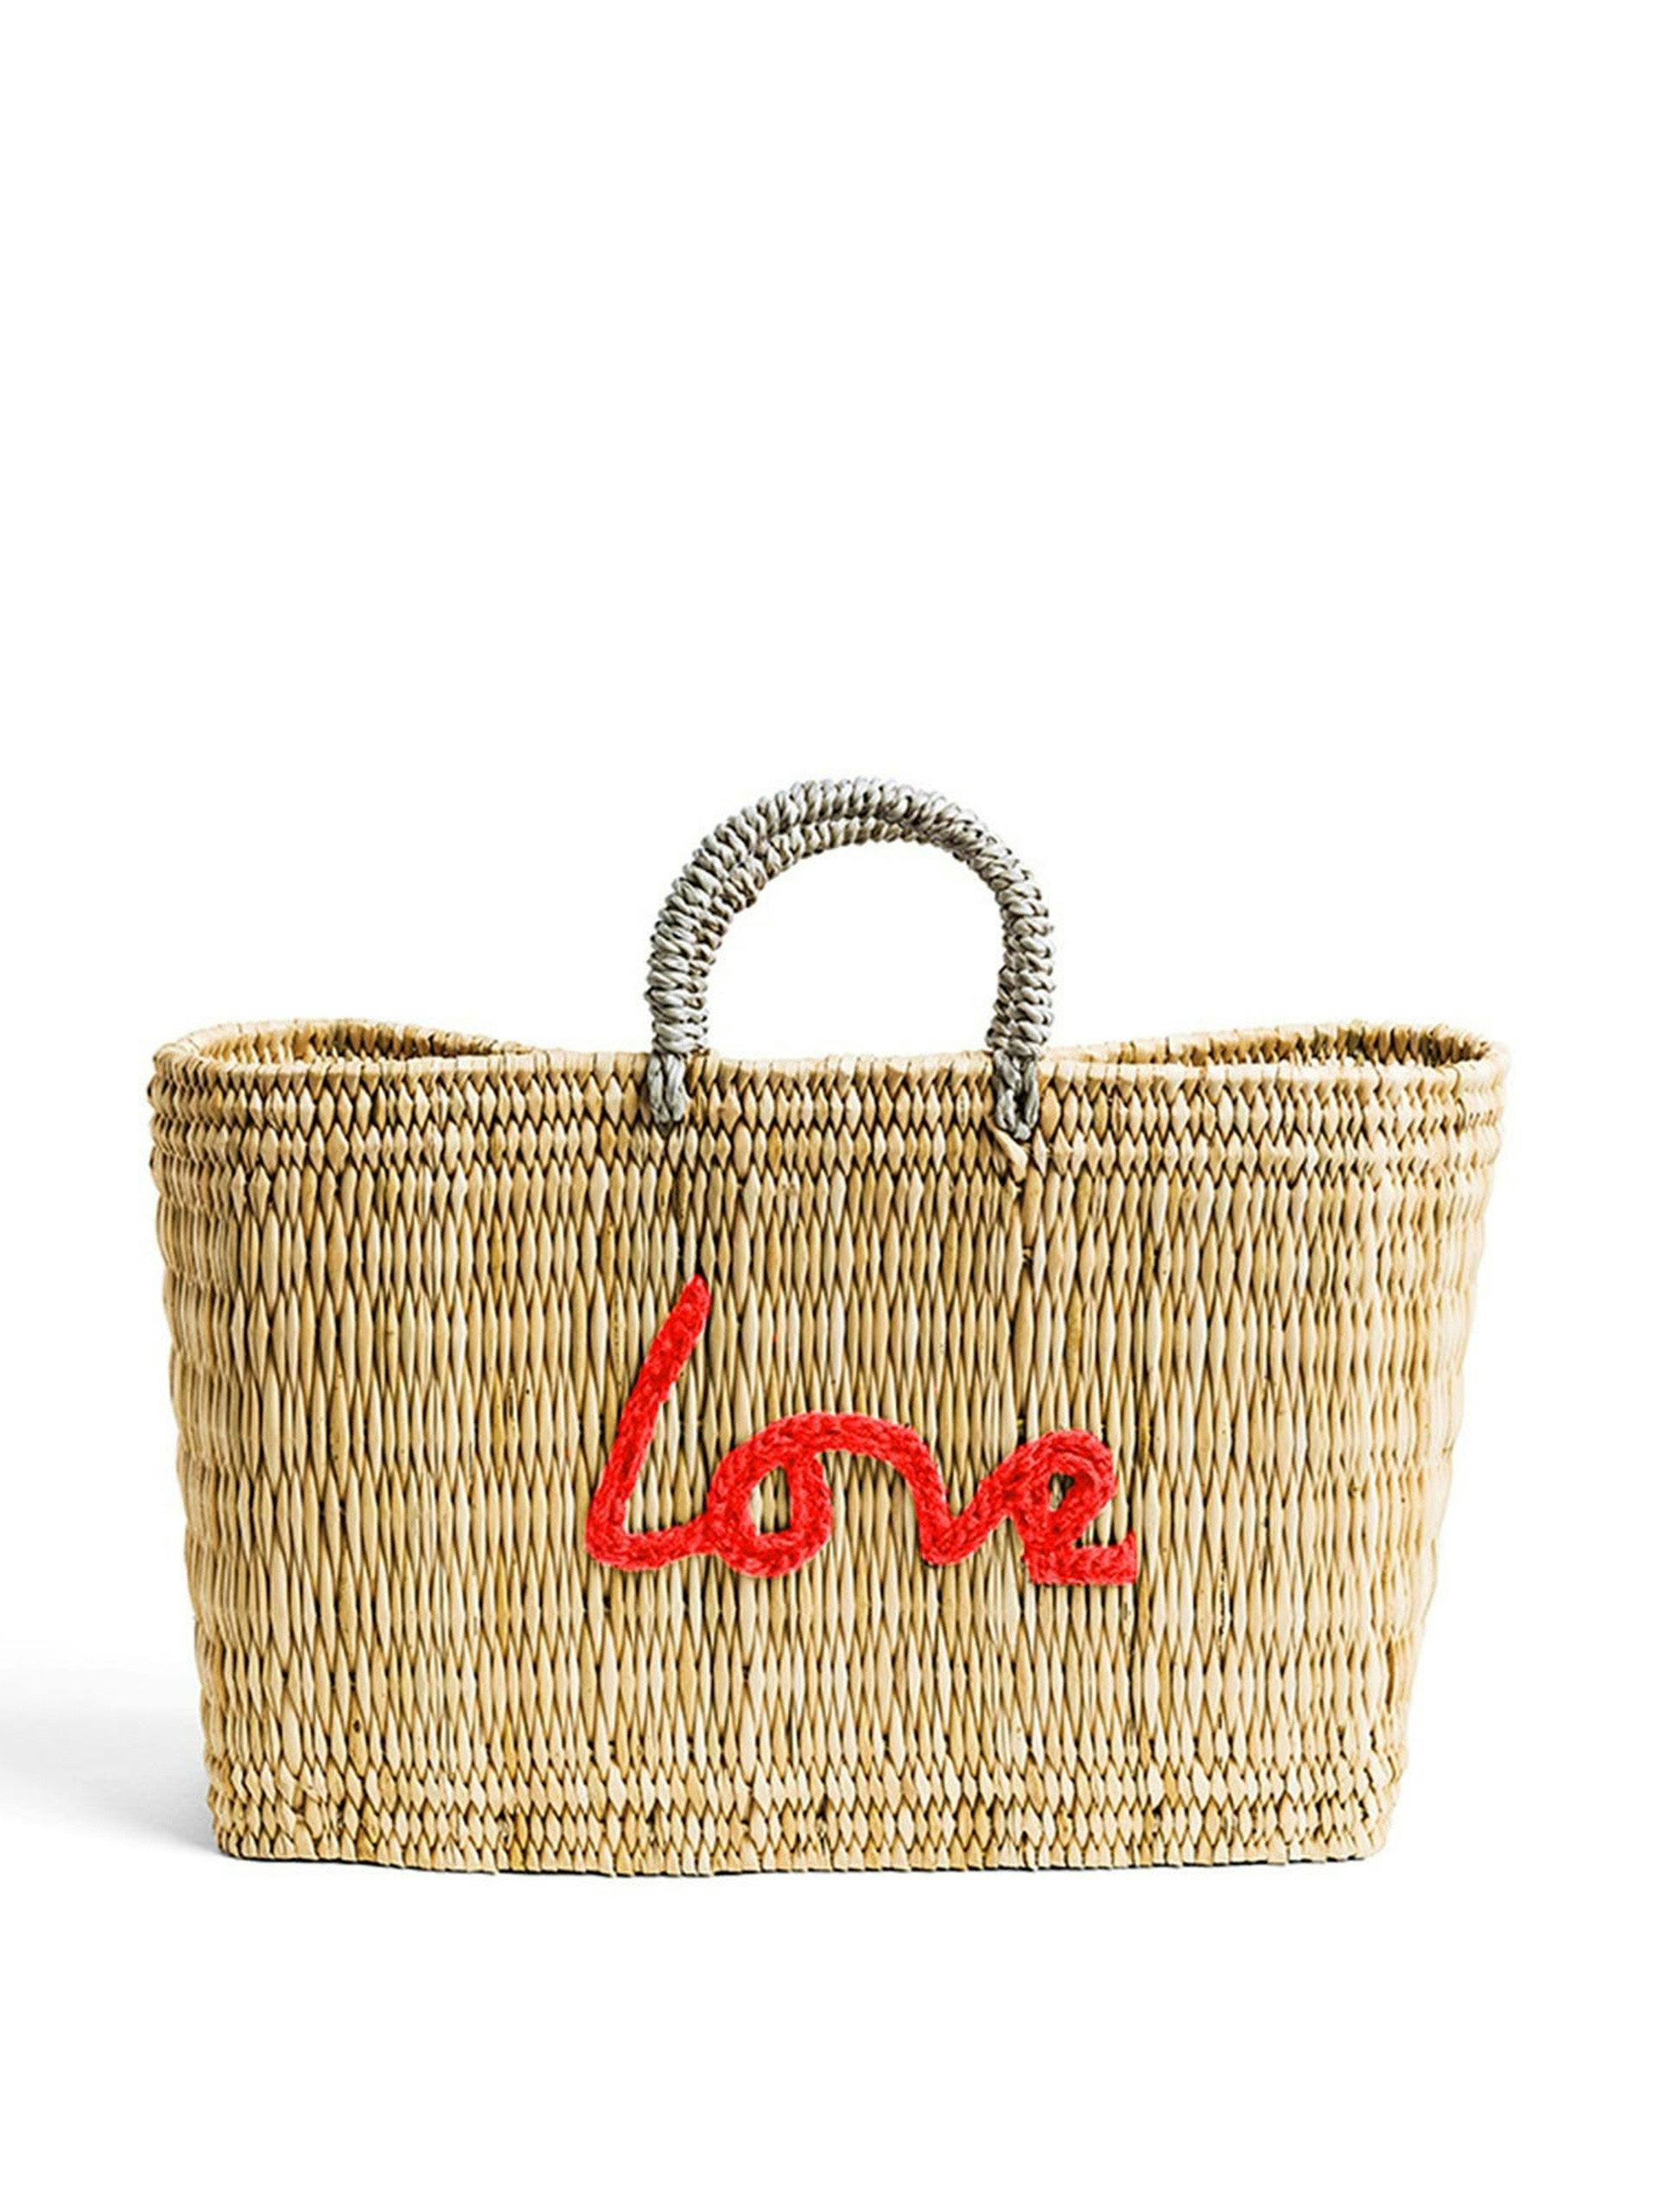 Love basket bag